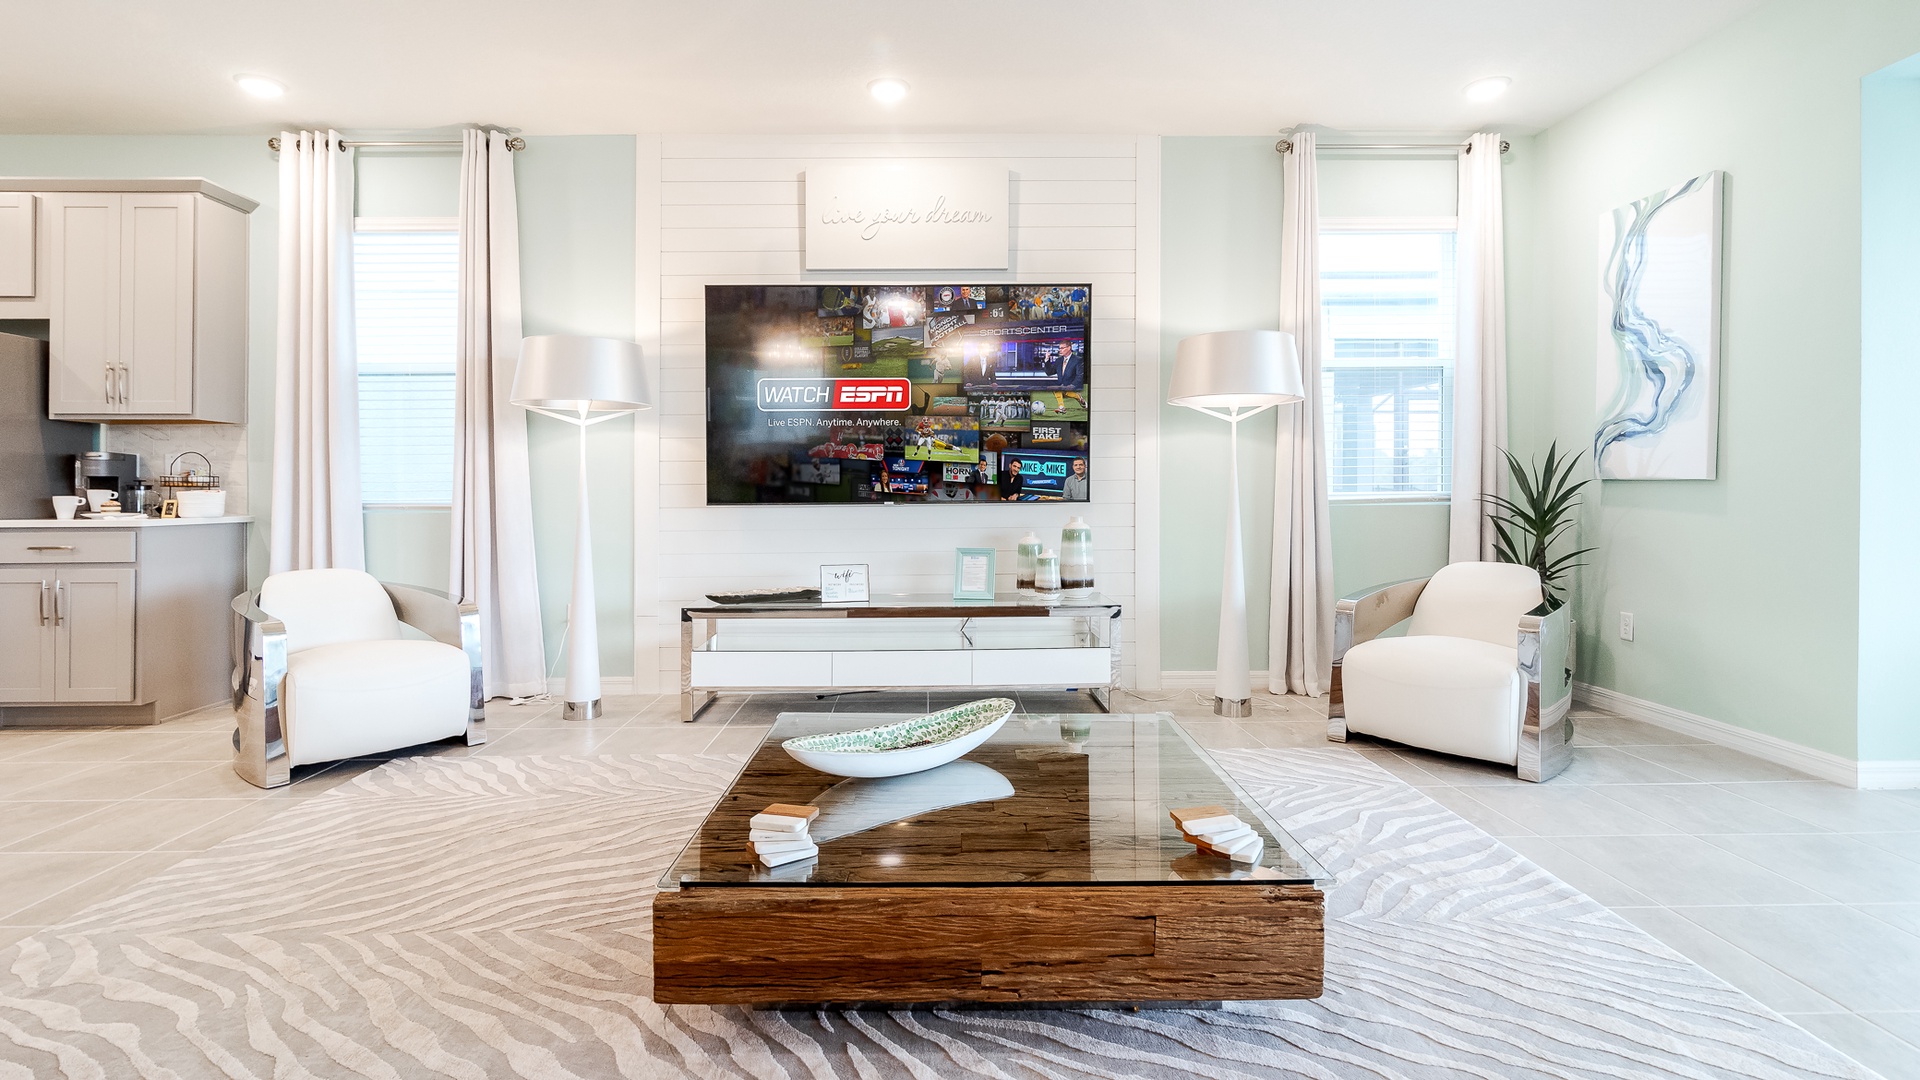 Living room has a SmartTV